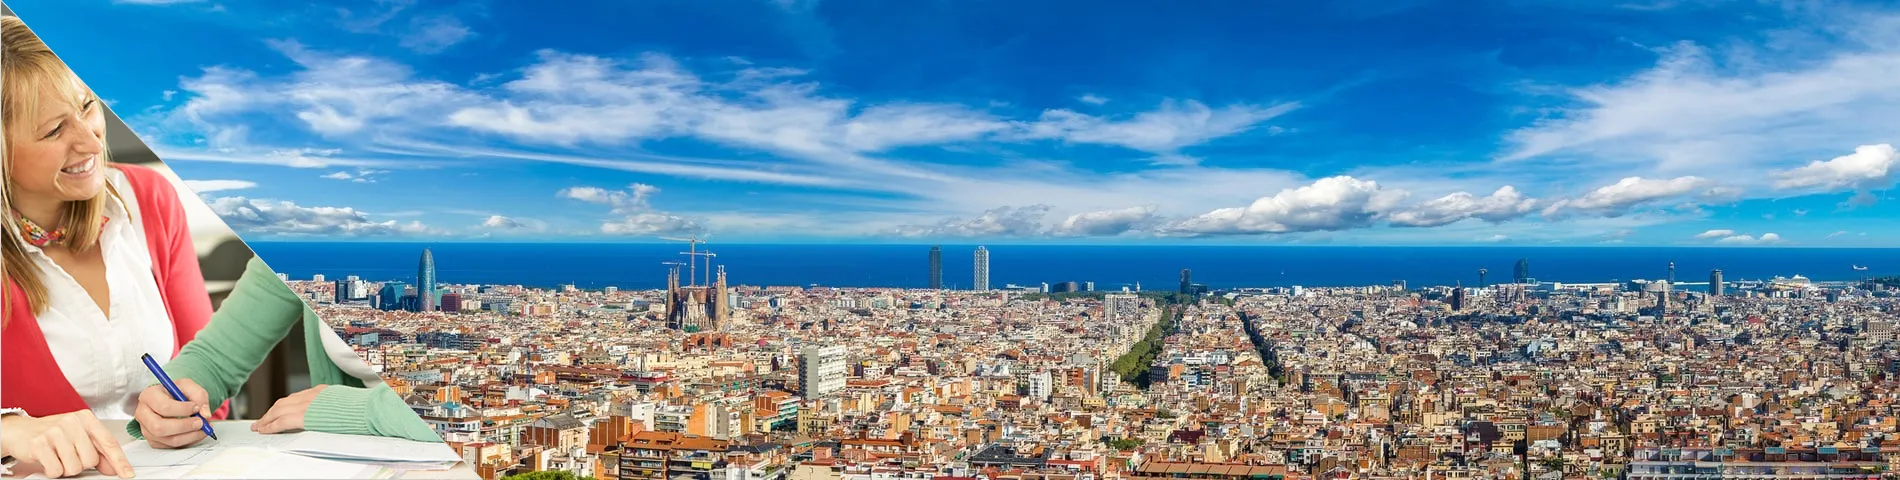 Barcelona - Studujte a žijte u svého učitele